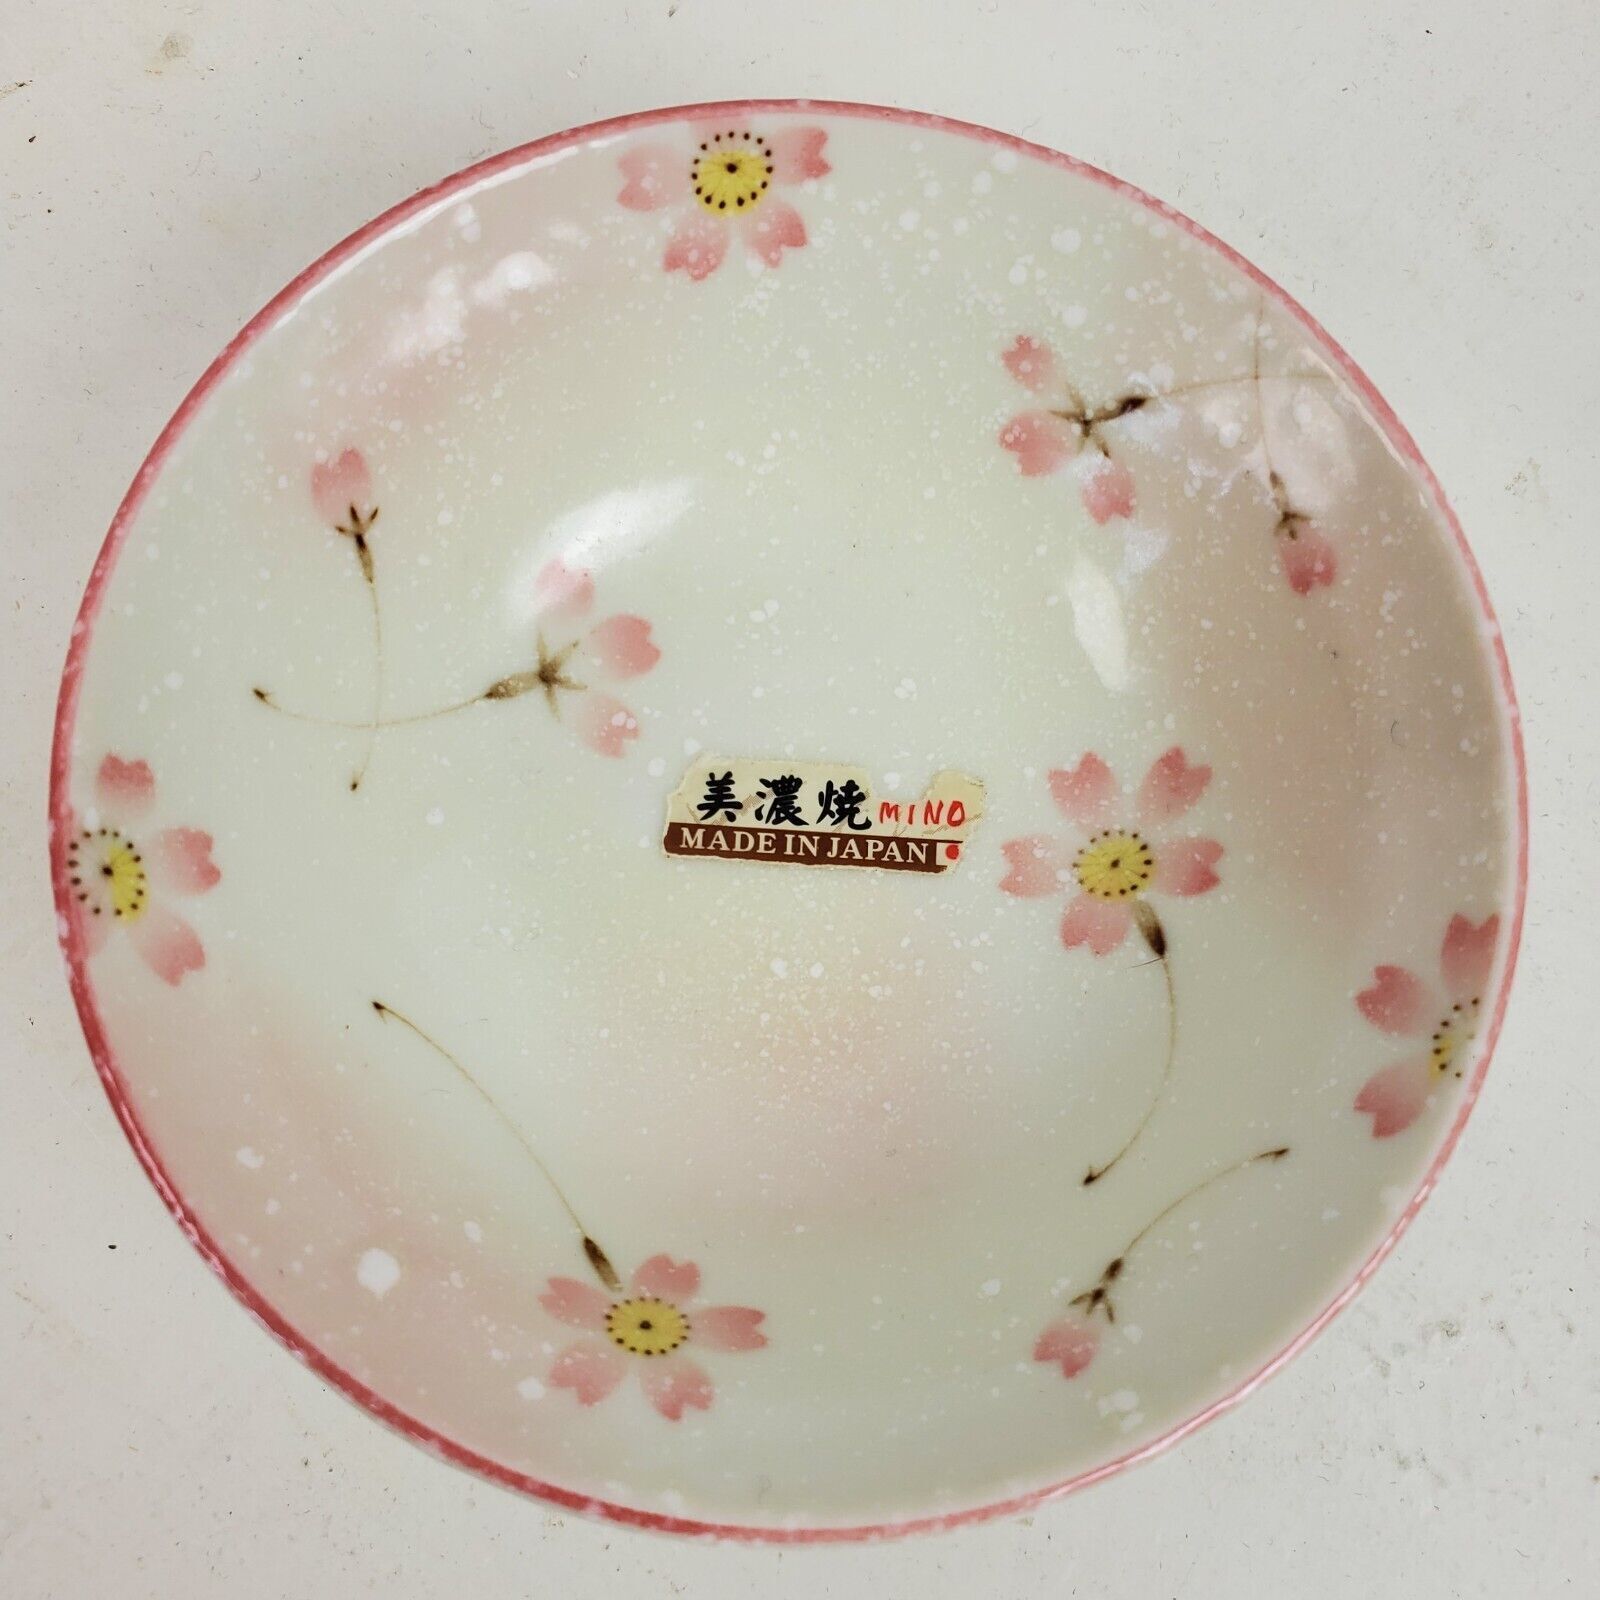 Vintage Japanese Mino Cherry Blossom Bowl 4.25 Inch